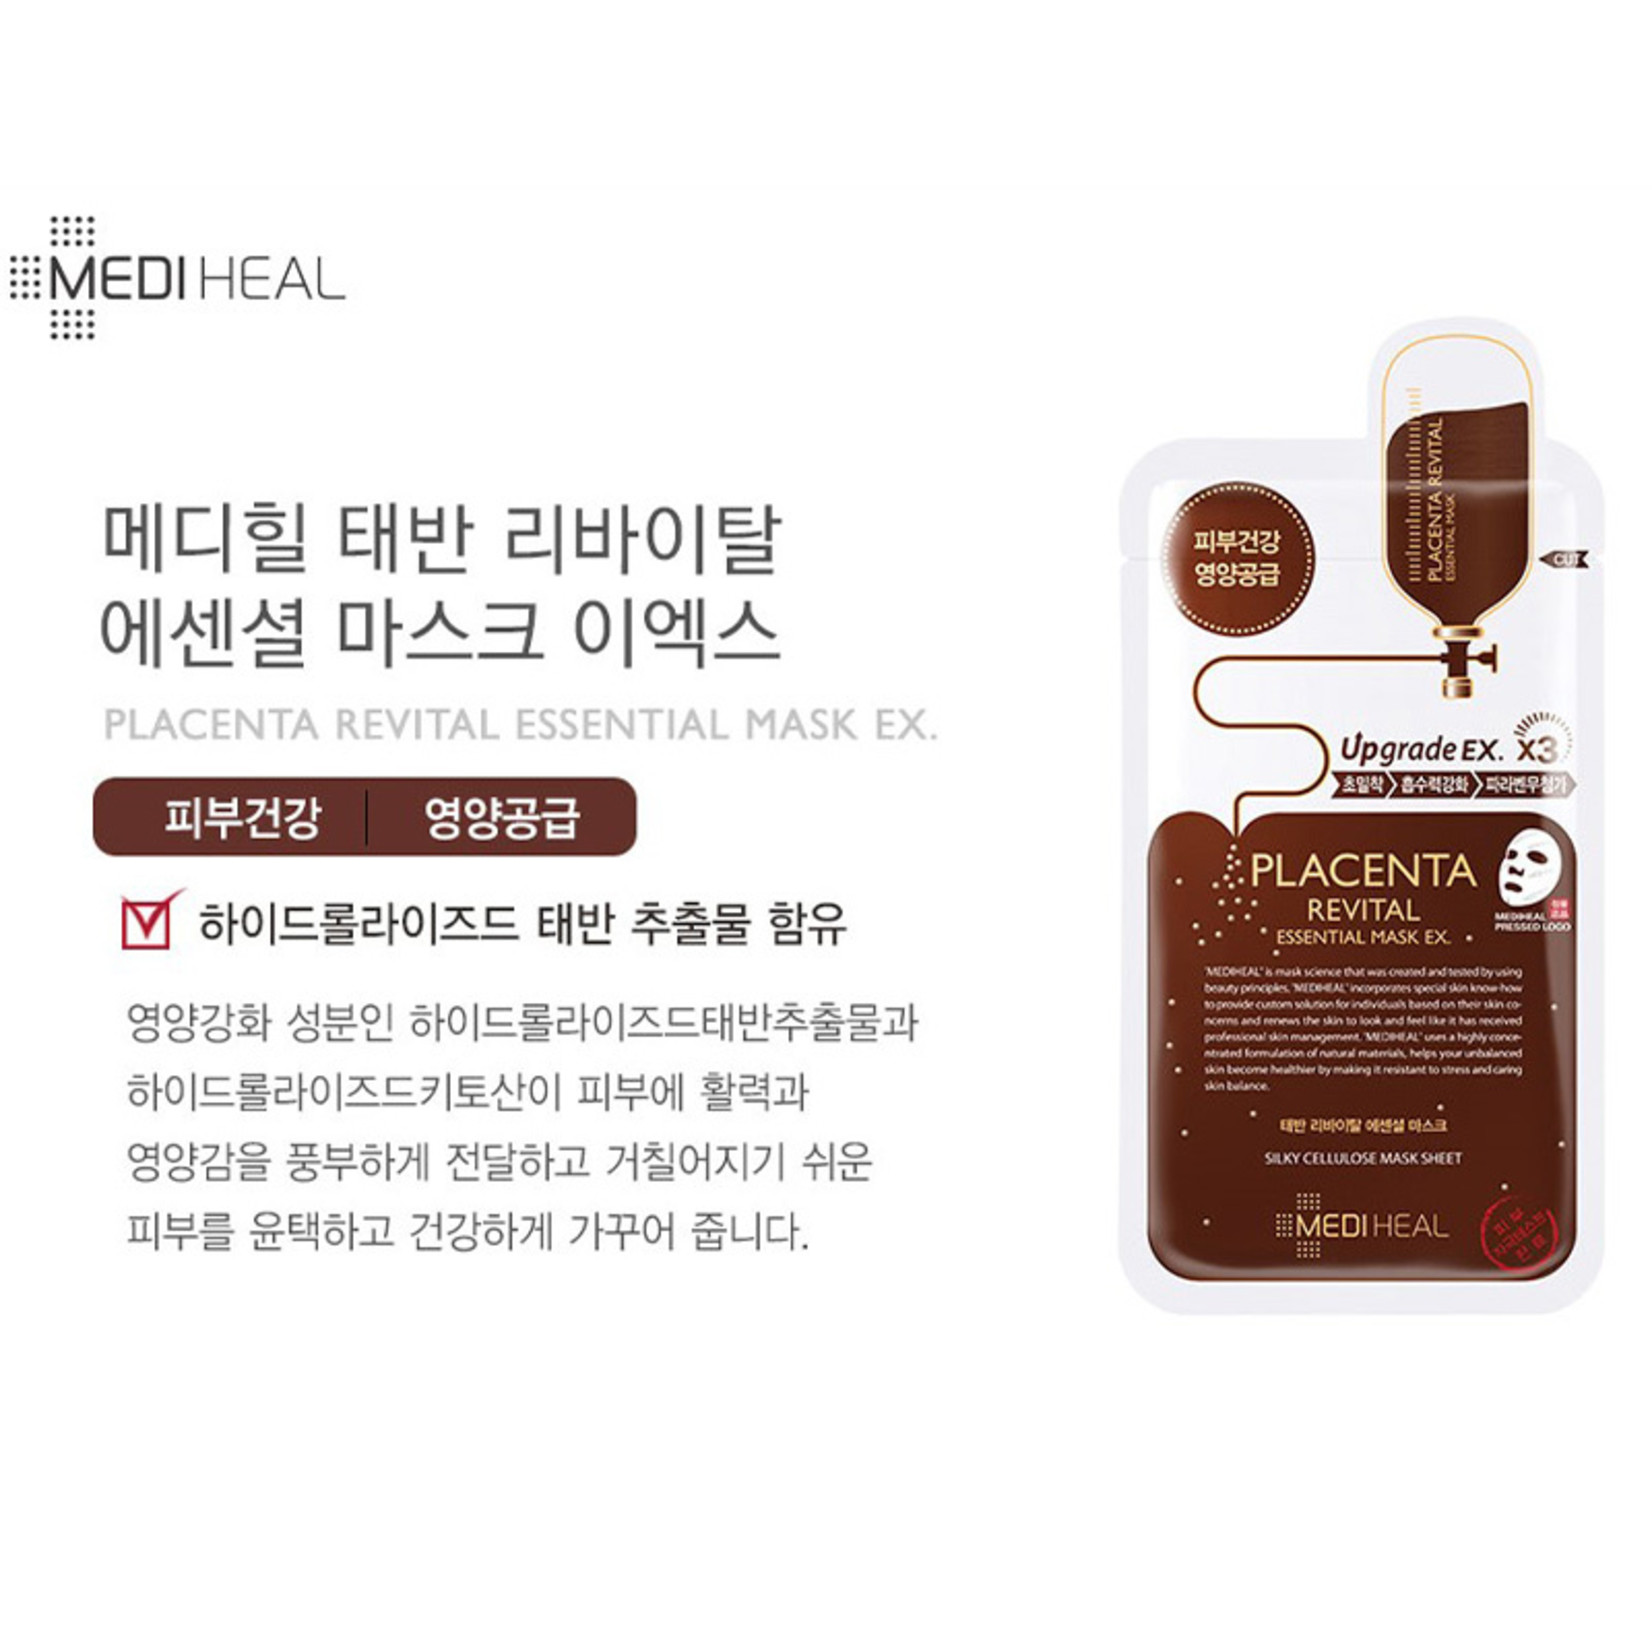 Mediheal Placenta Revital Essential Mask EX.